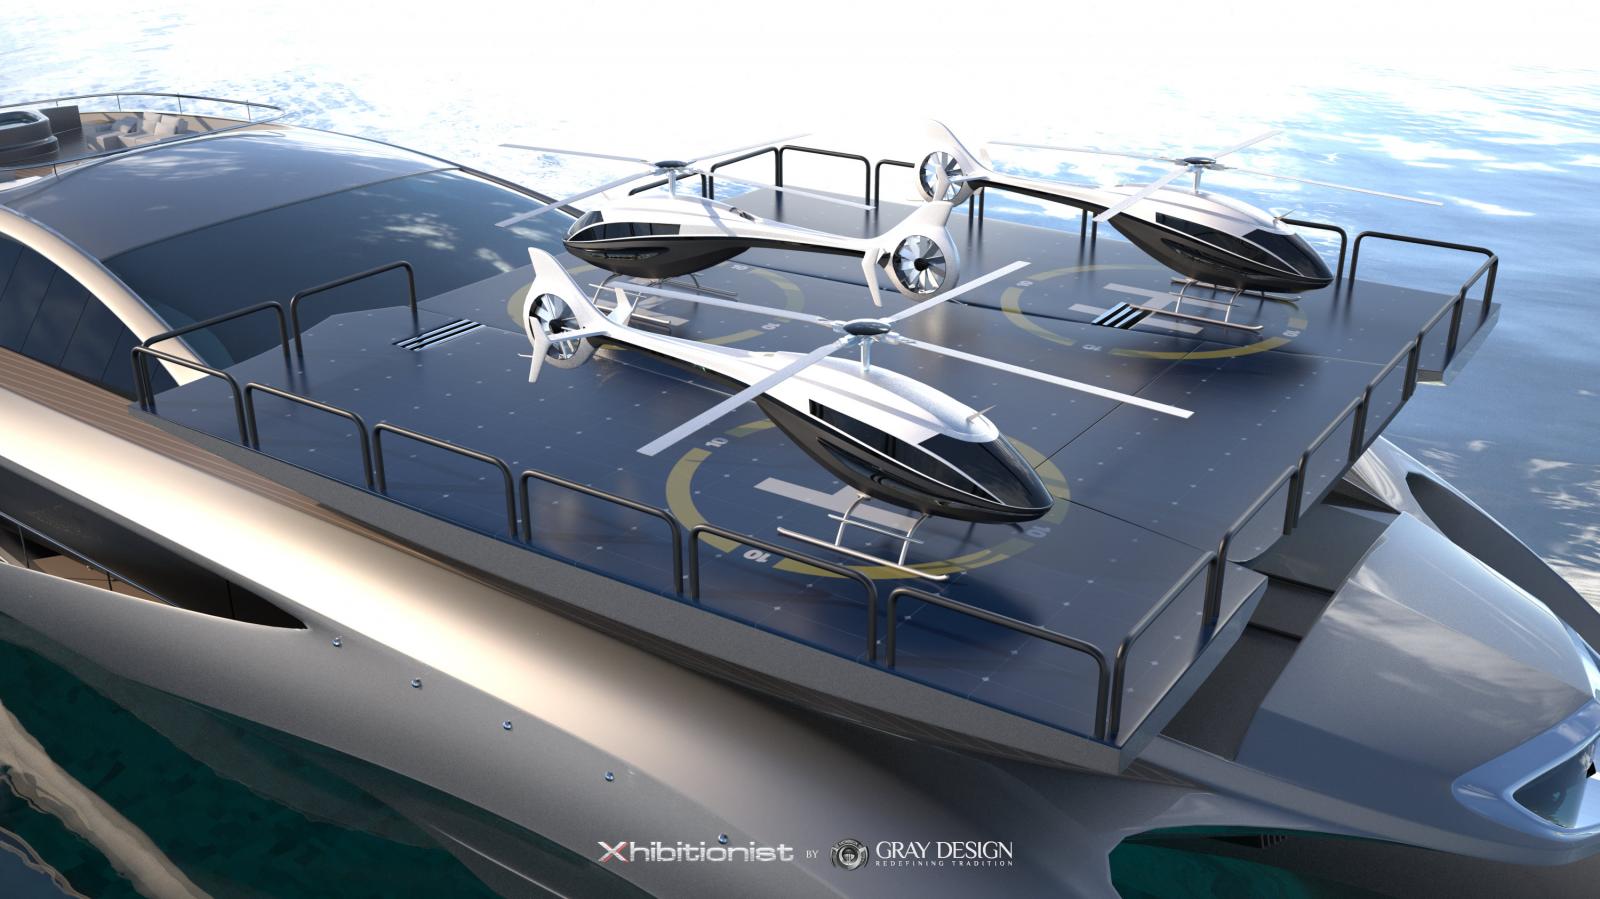 Gray-Design-Xhibitionist-yacht-and-Xhibit-G-car-4